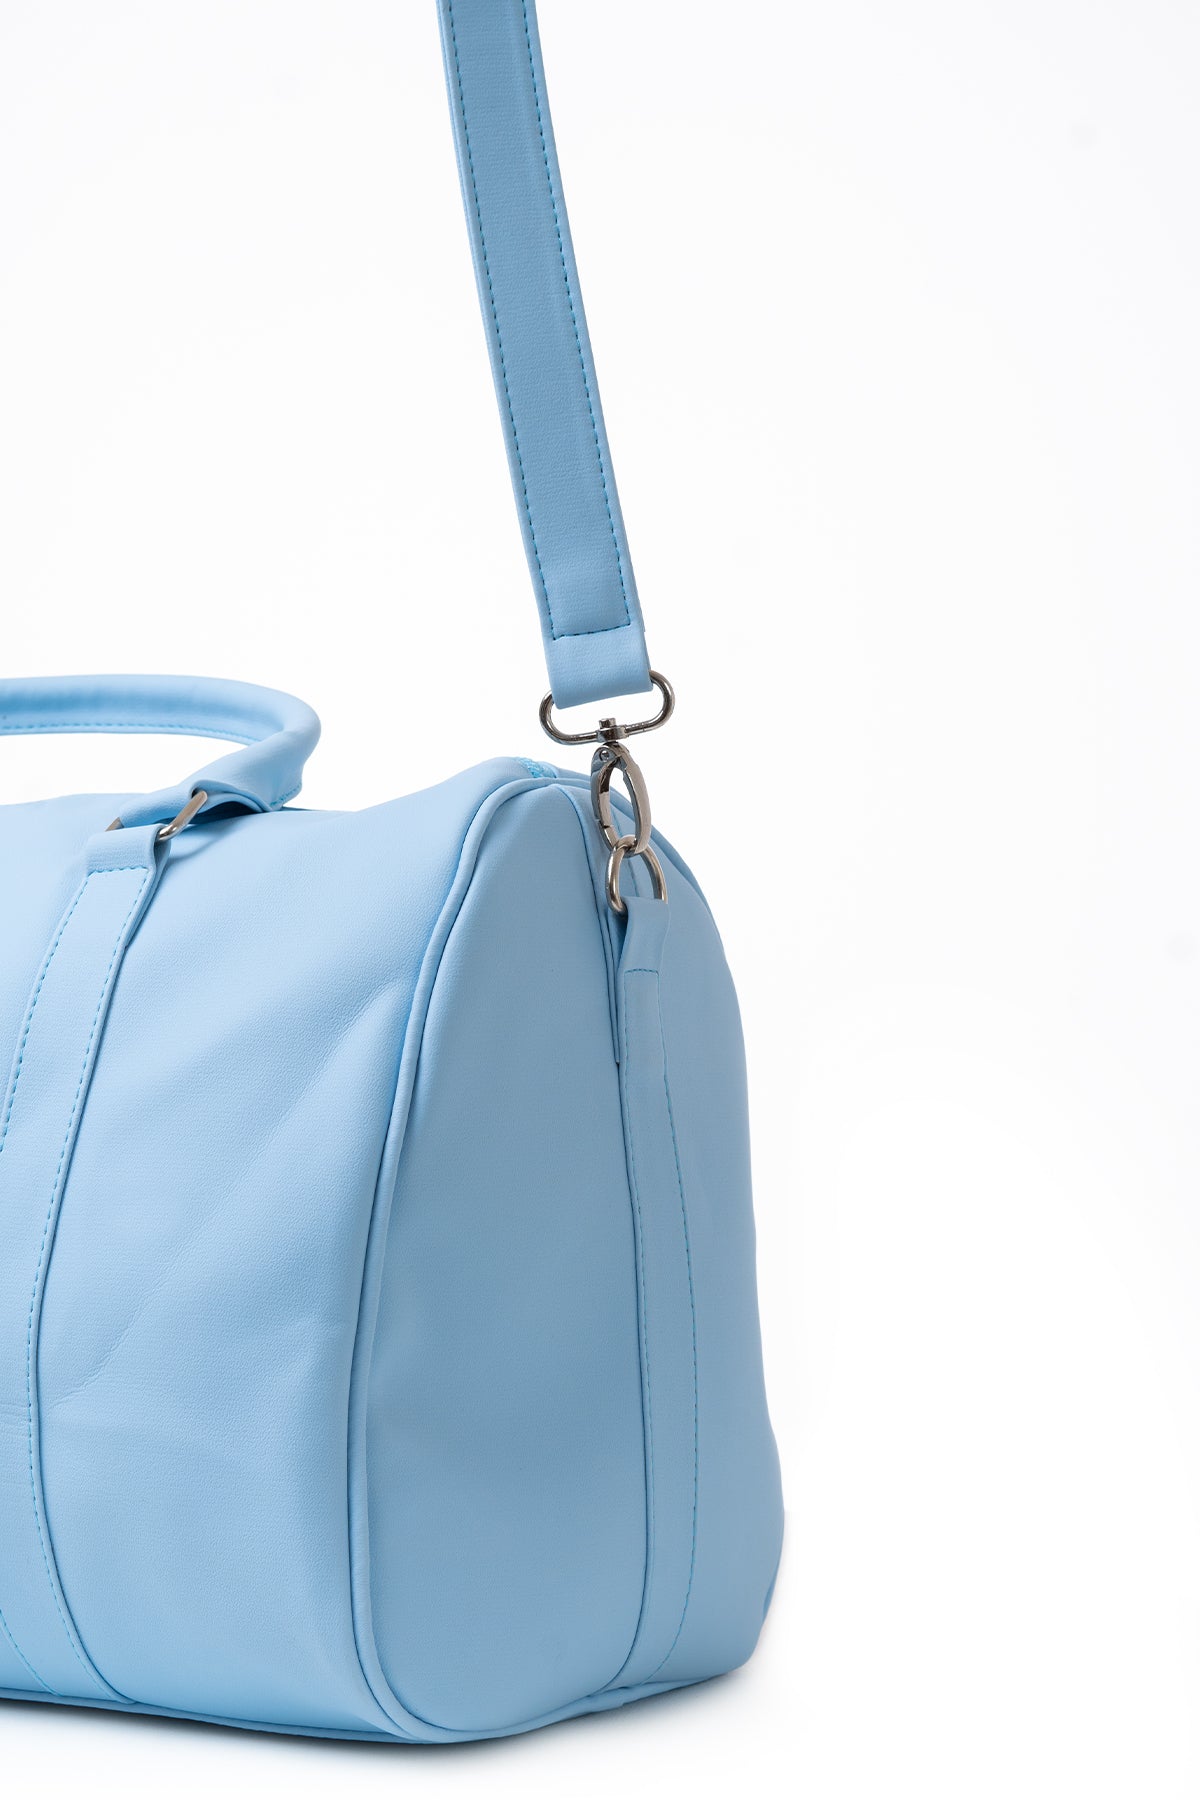 Baby Blue Duffel Bag